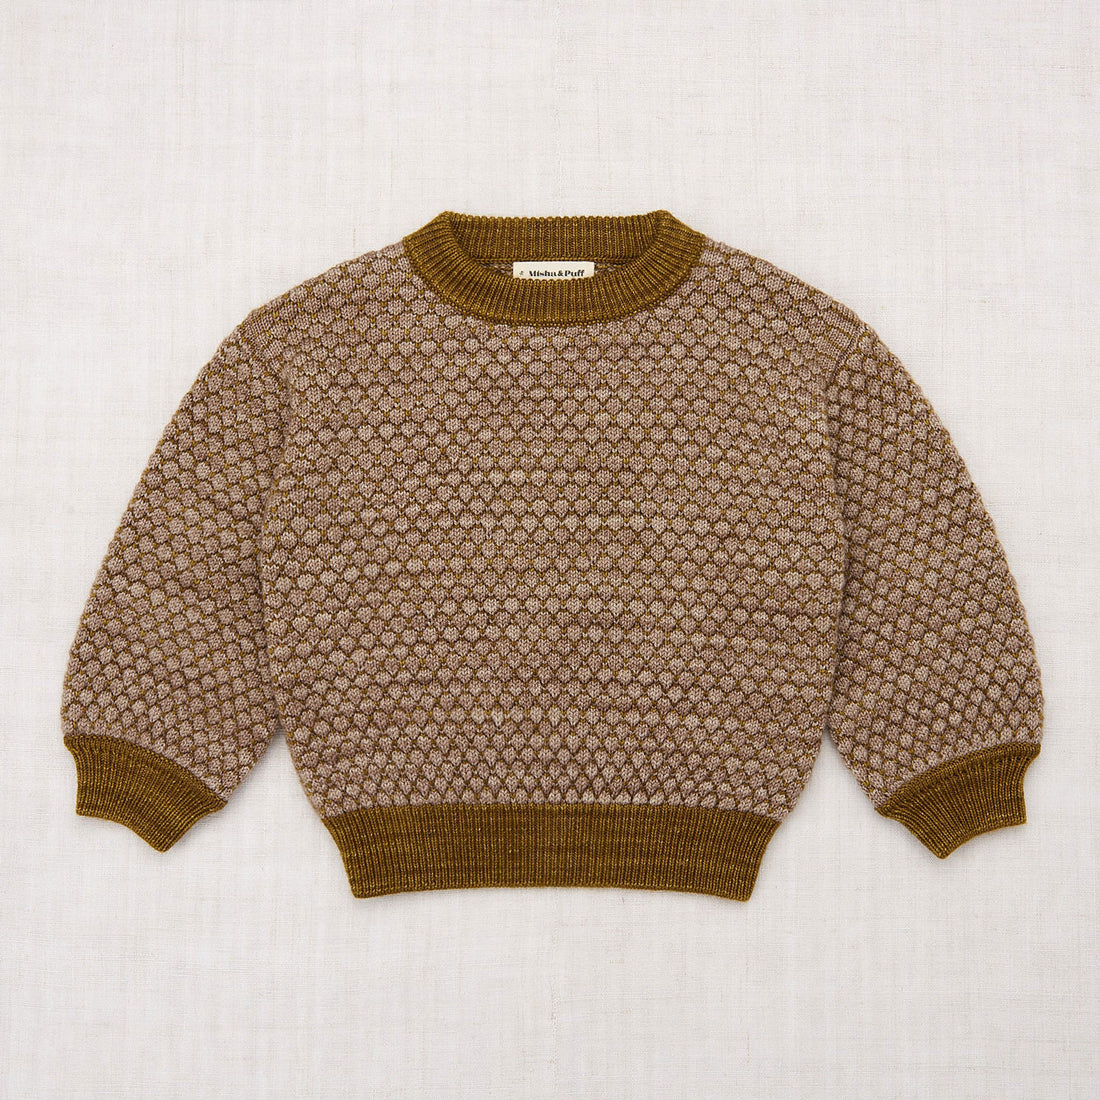 Misha and Puff Cobblestone Sweater - Slab